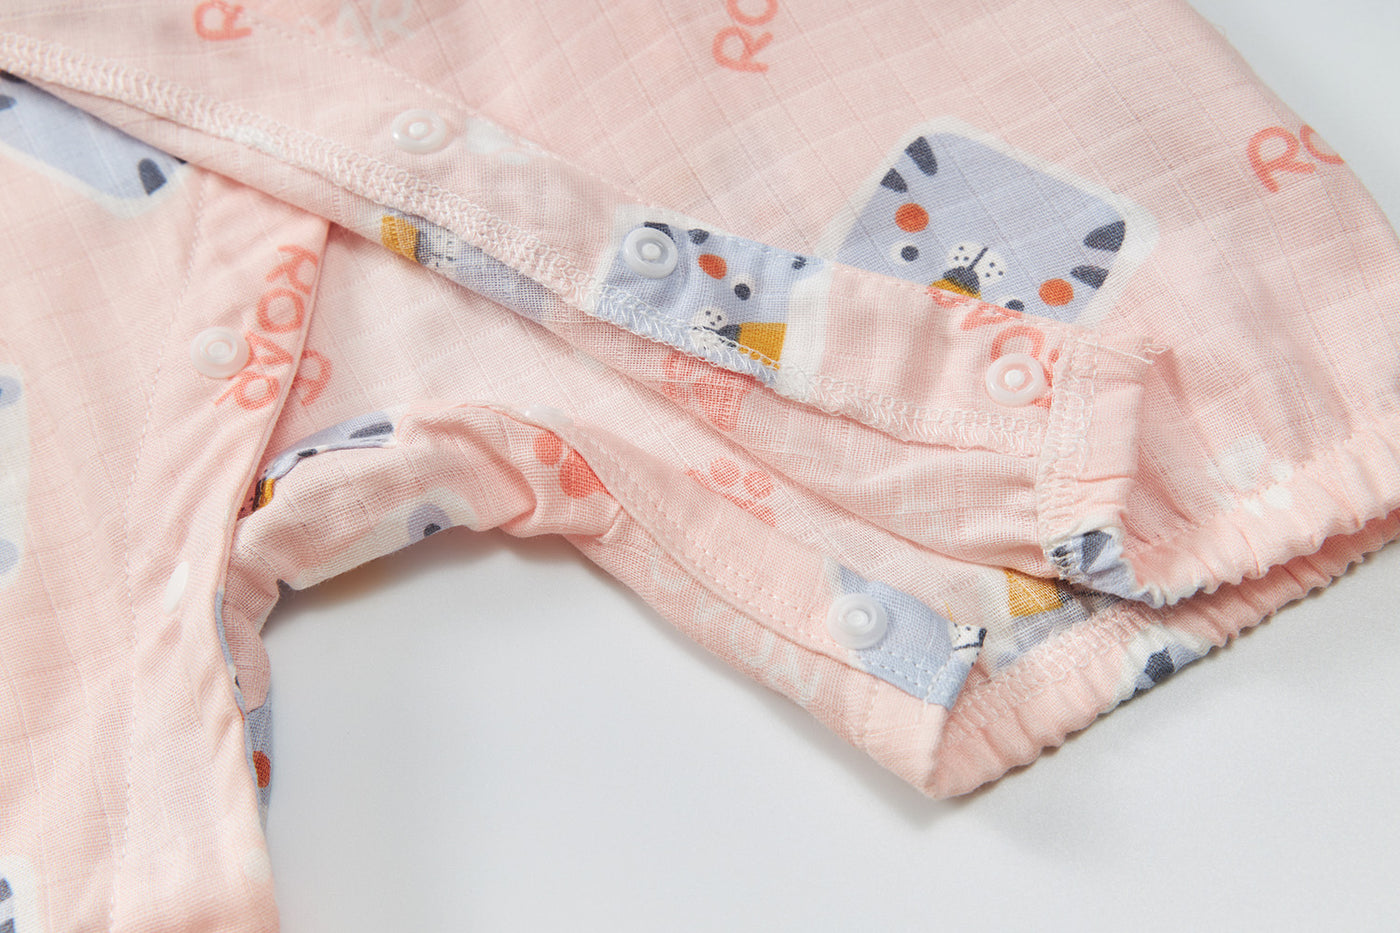 Baby Breathable Cotton Gauze Fabric Kimono Romper Pink w Cats - Little Kooma